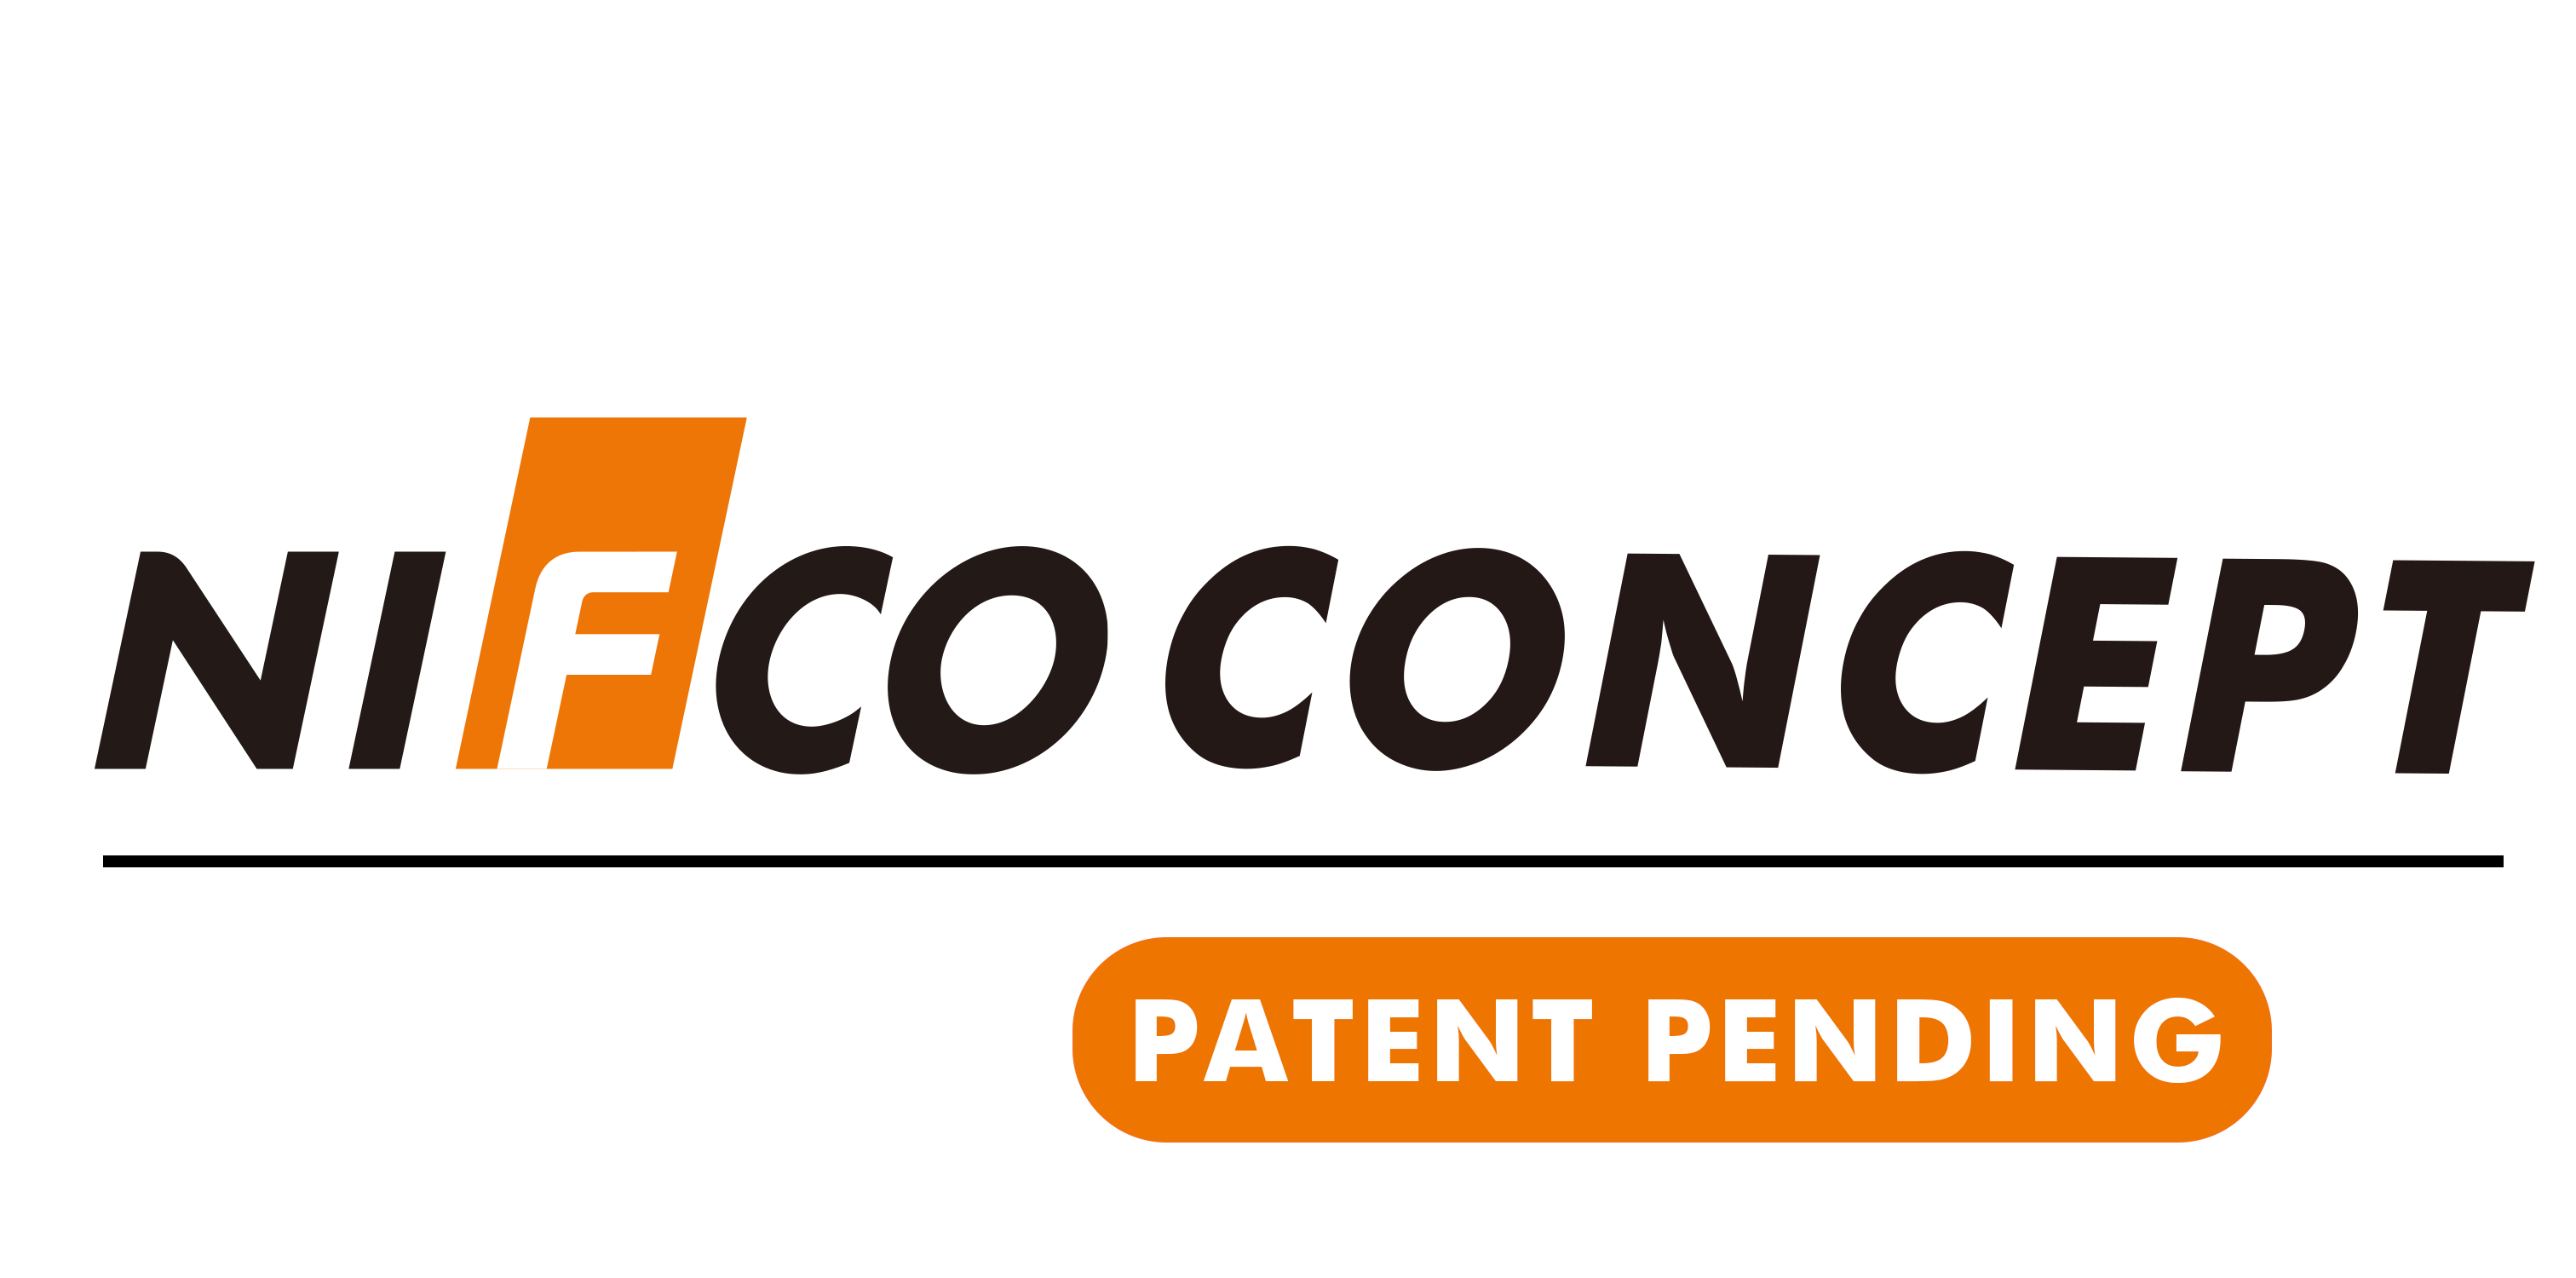 Nifco Concept Patent Pending